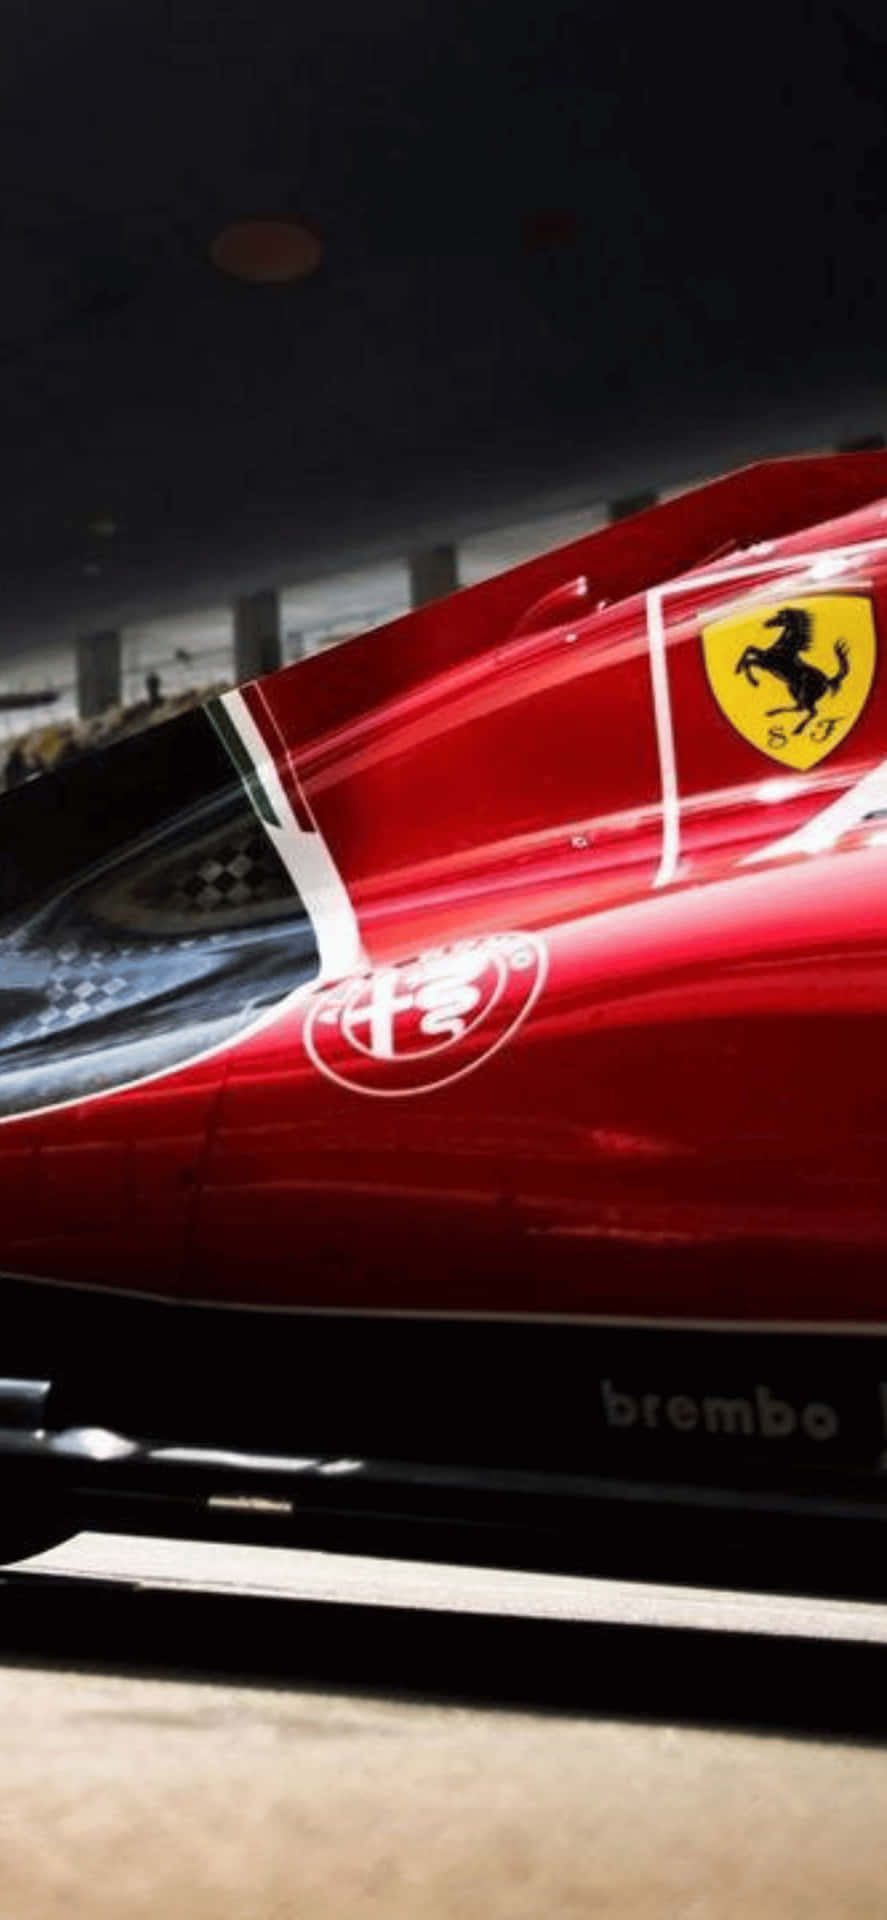 Ferraripå Insidan Iphone Xs F1 2018 Bakgrund.